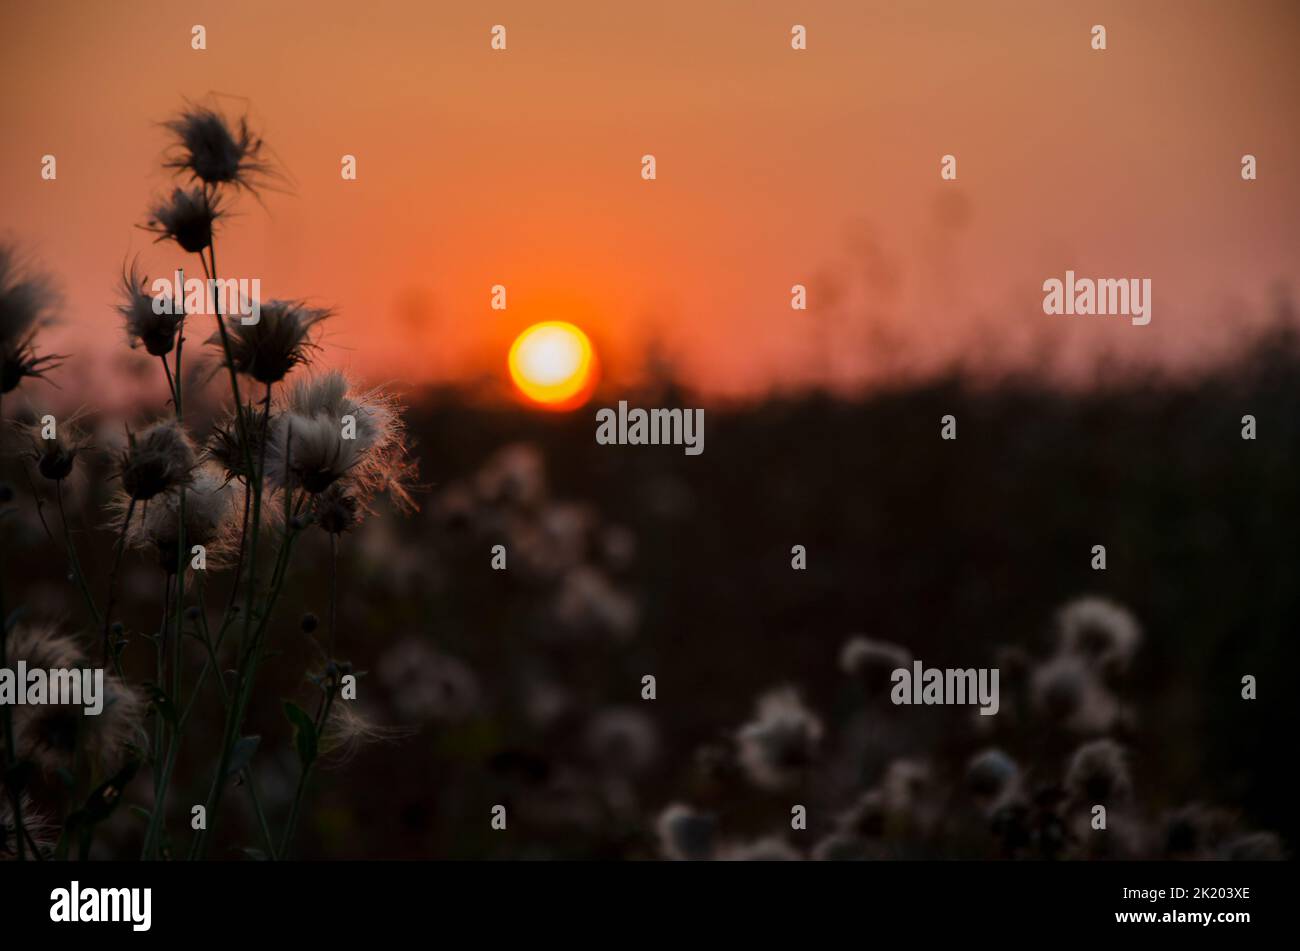 Dry grass blowballs on evening sunset background Stock Photo